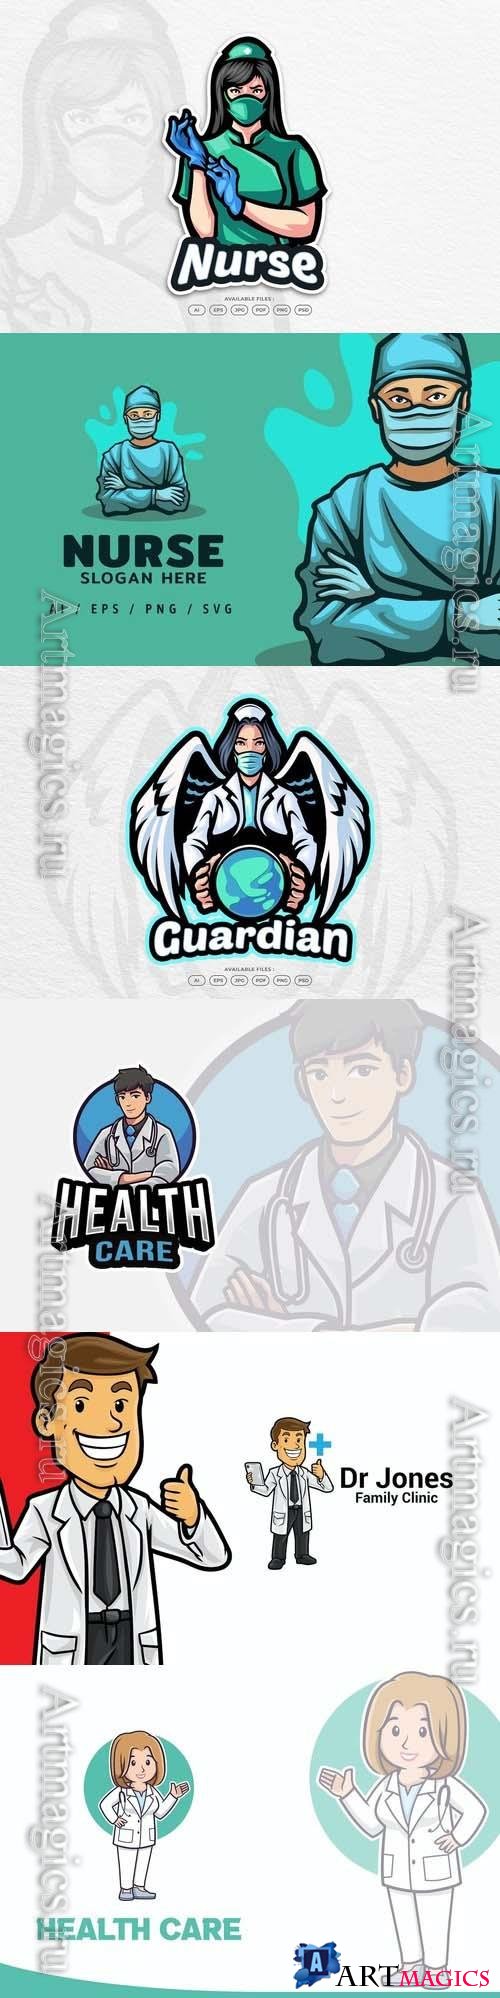 Medical health care clinic logo template